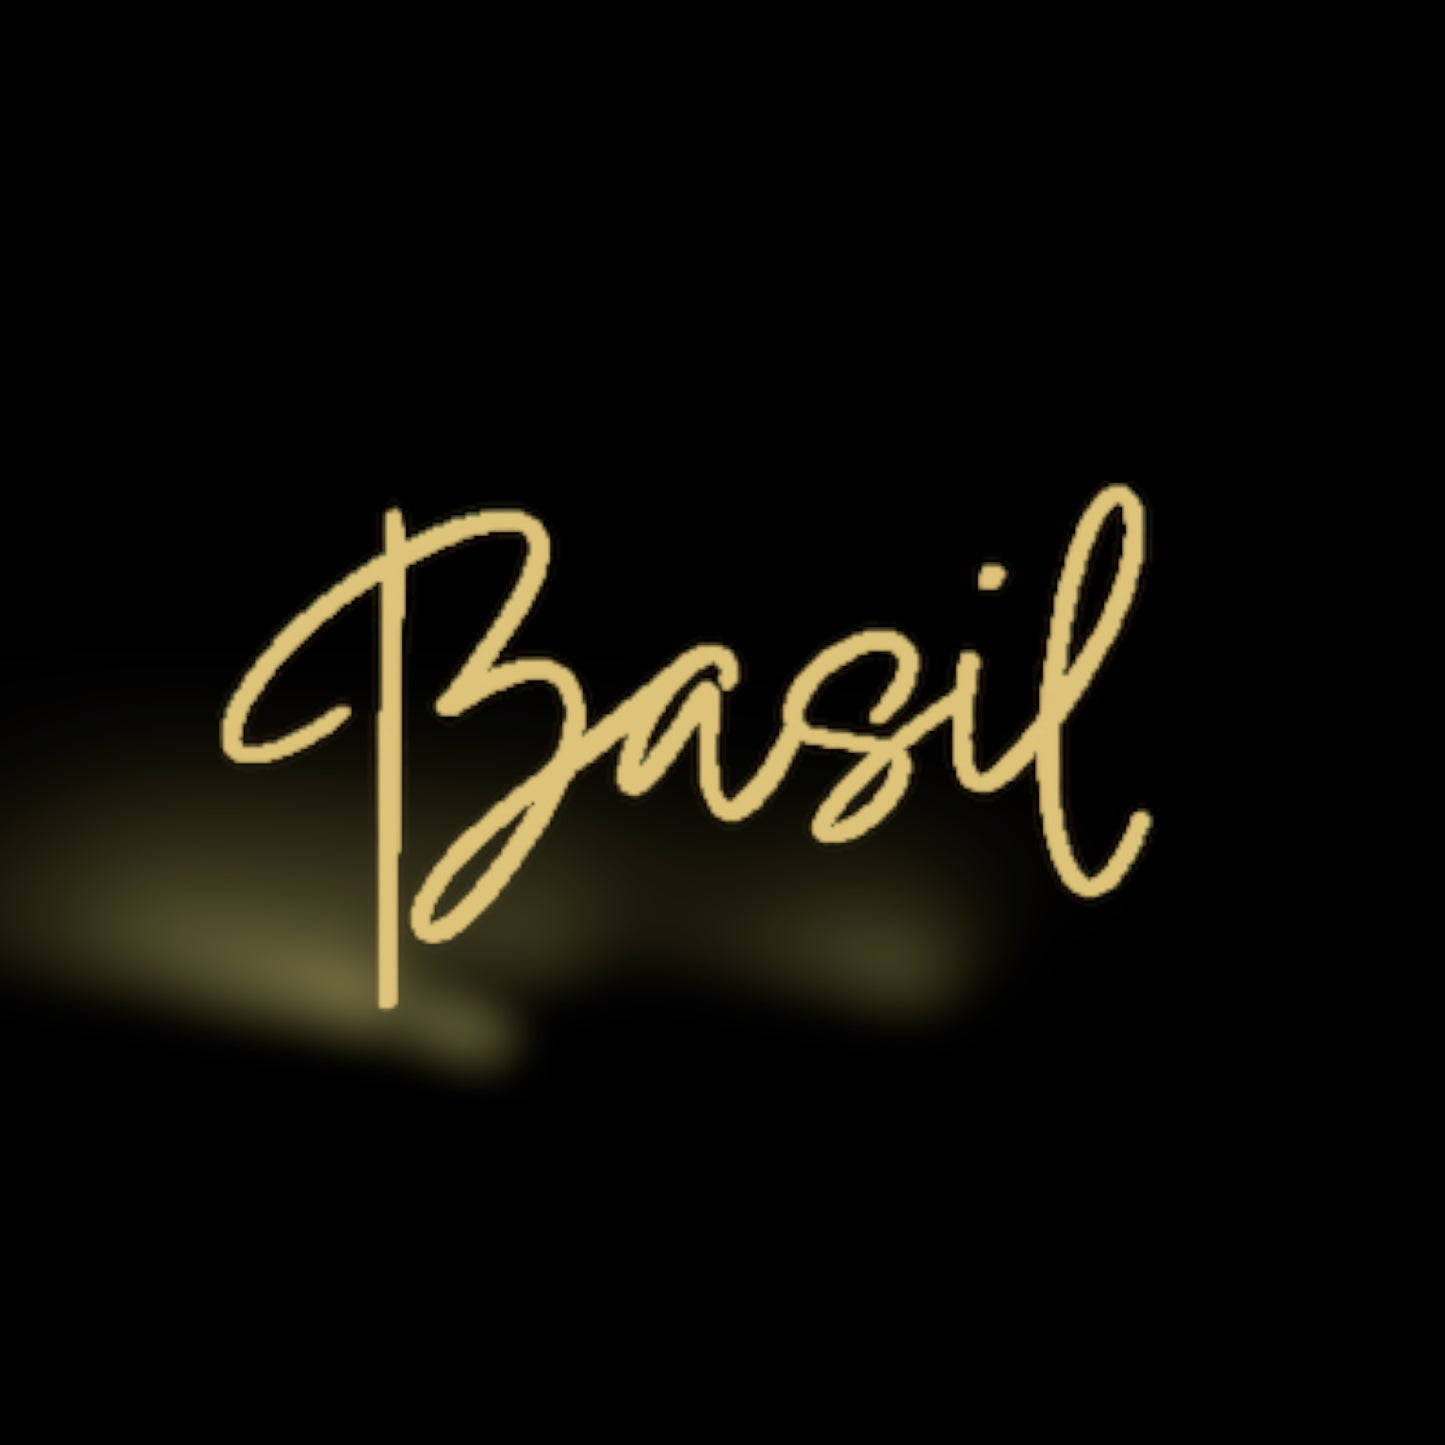 Basil Olive Oil - Extra Virgin